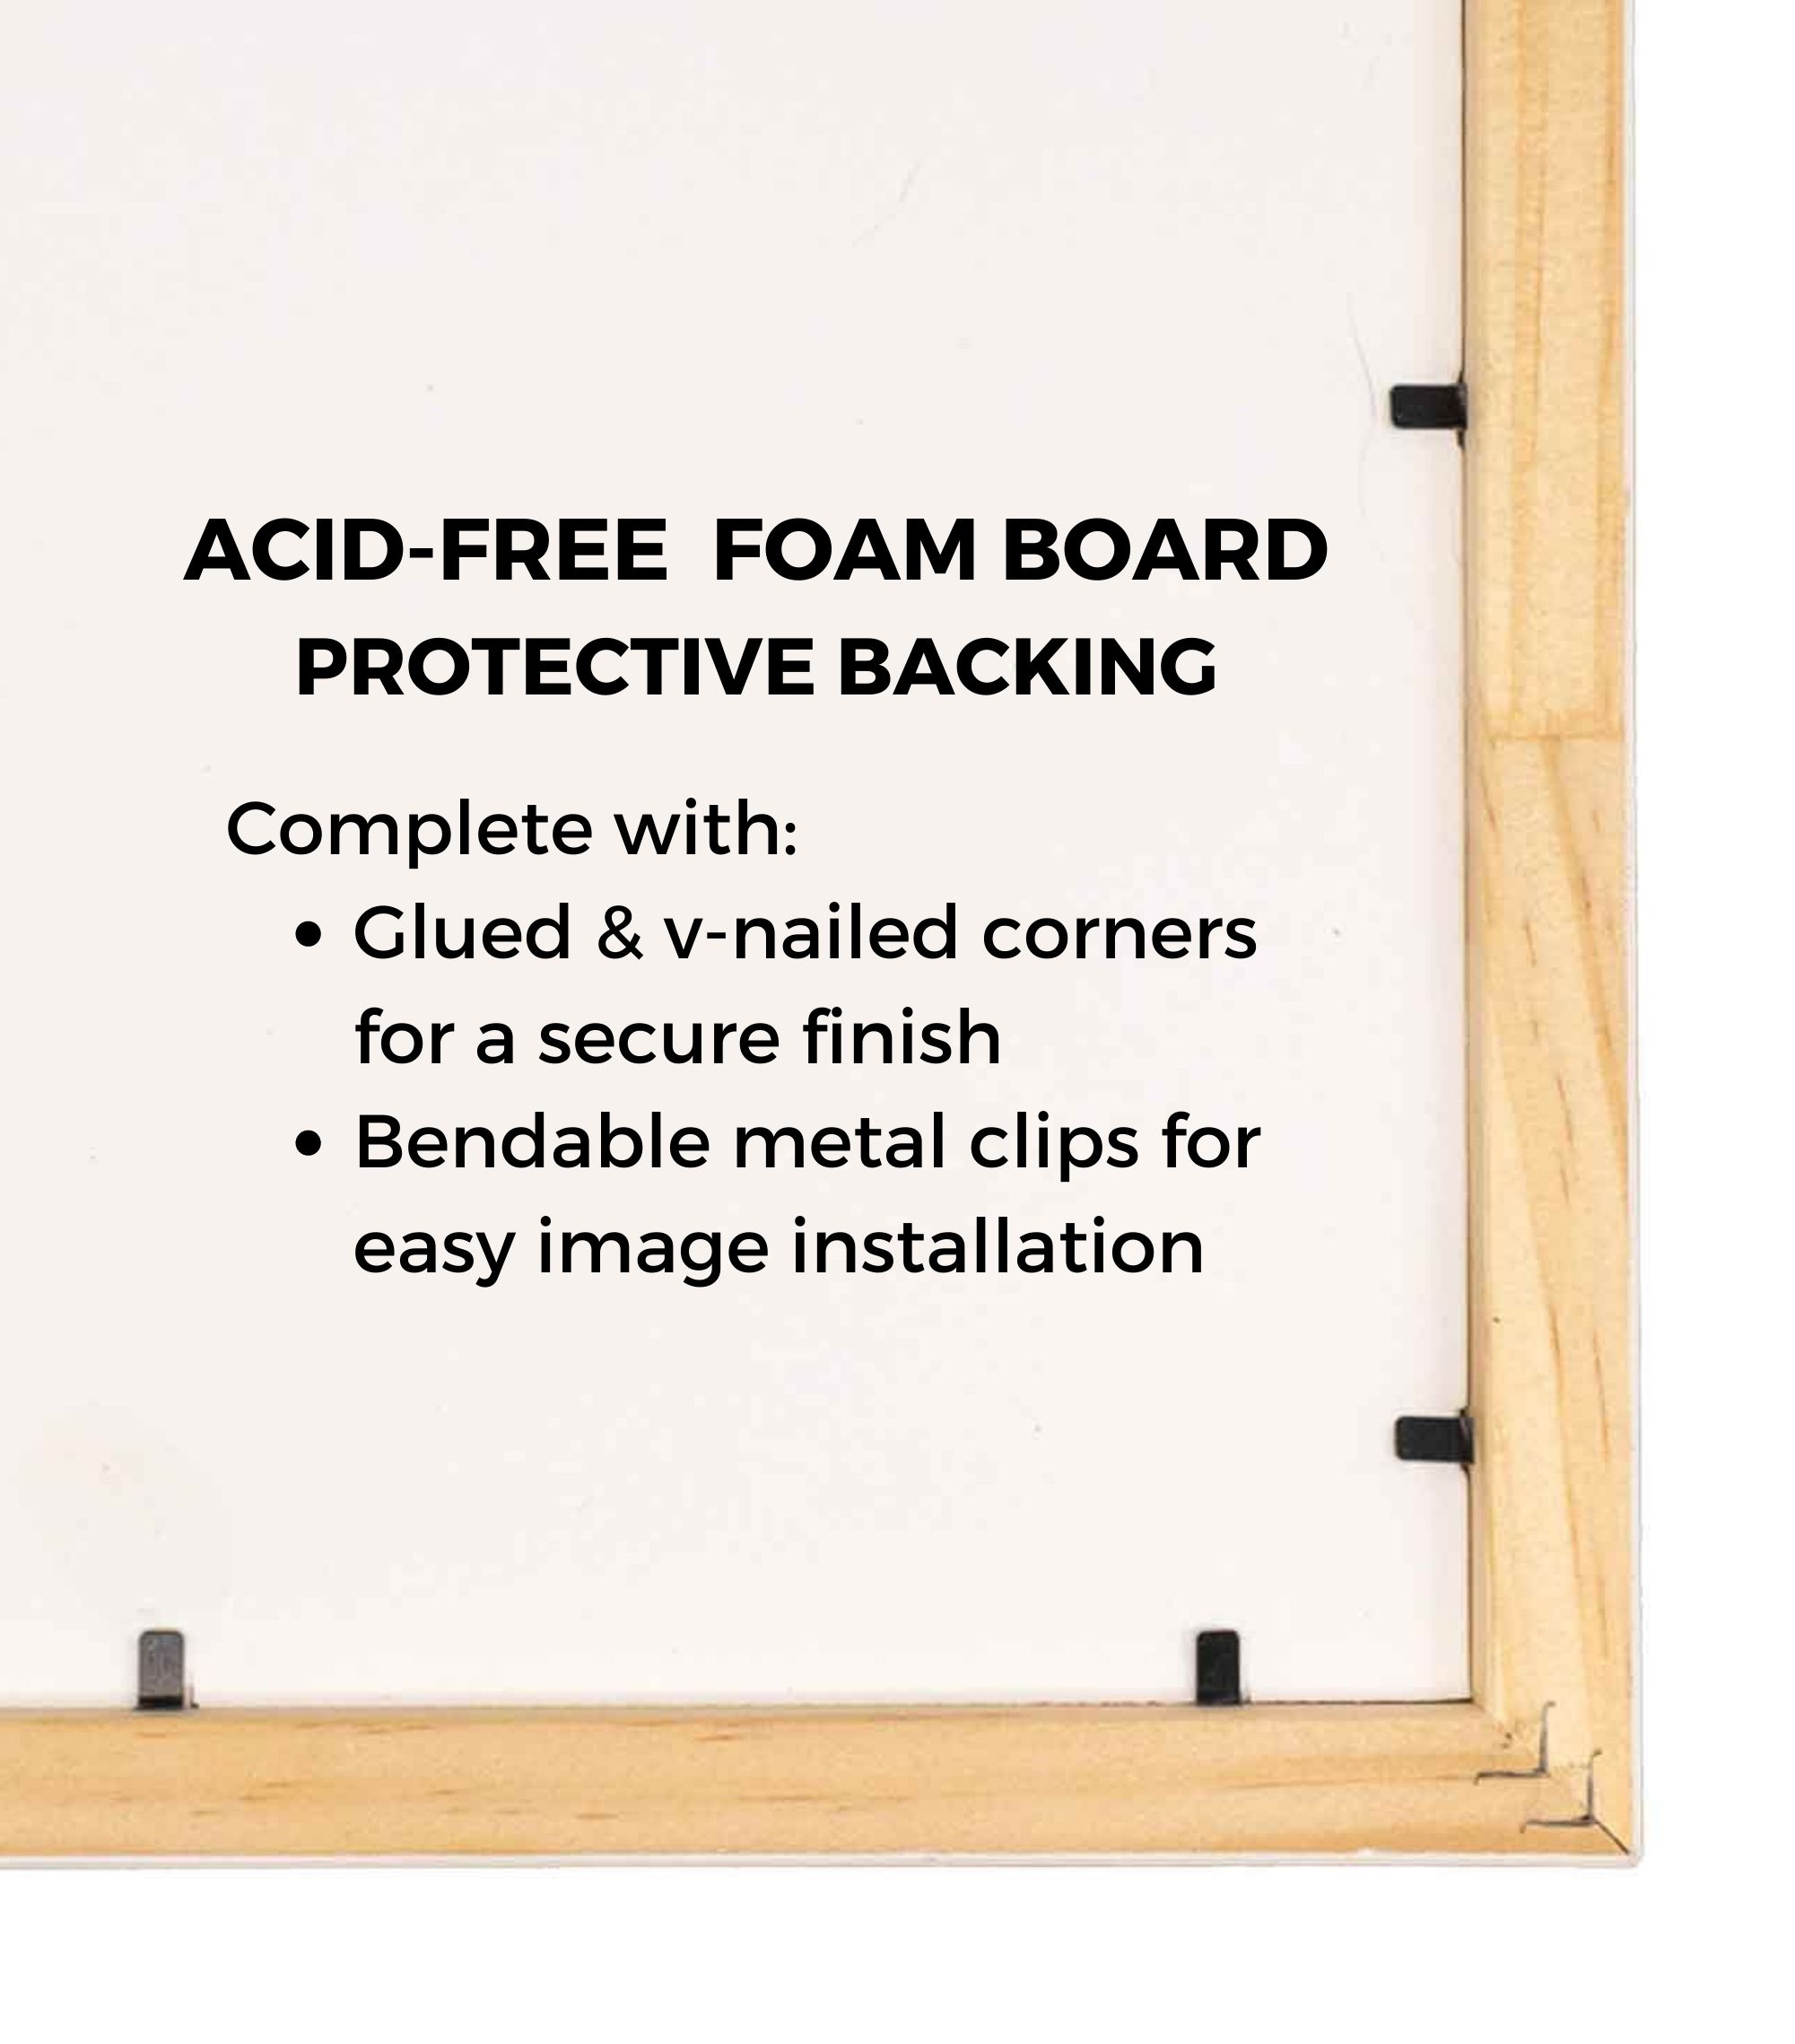 CustomPictureFrames.com 24x32 Flat Charcoal Grey Wood Frame - "The Edge" Medium - Great for Posters, Photos, Art Prints, Mirror, Chalk Boar